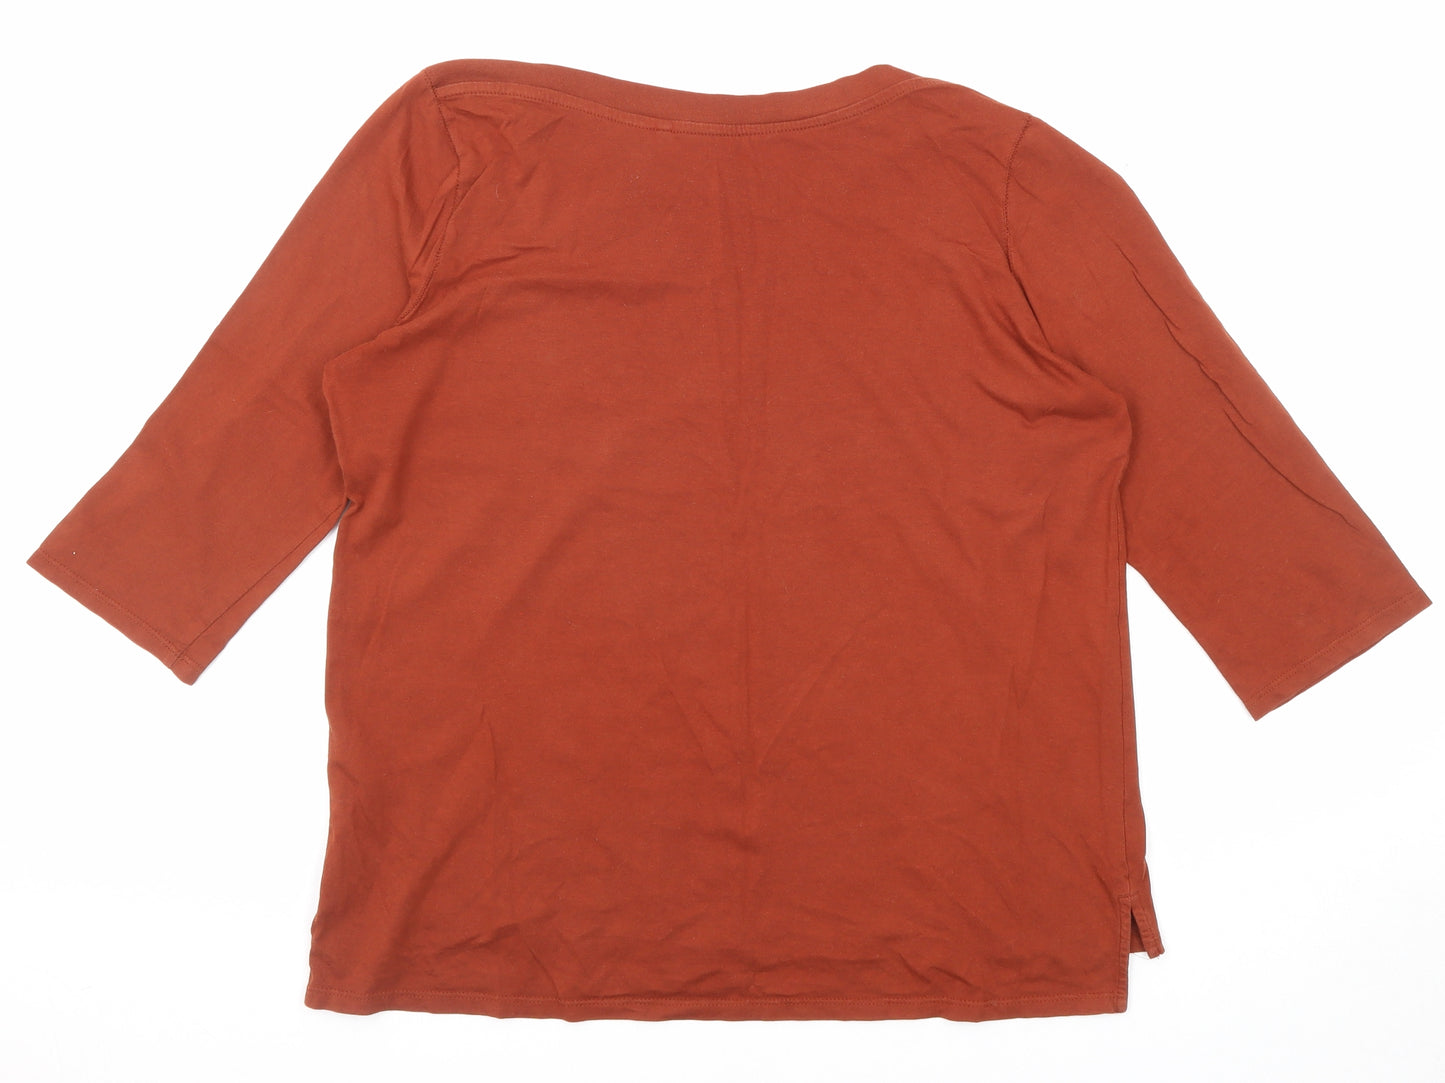 NEXT Womens Brown Cotton Basic T-Shirt Size 14 Round Neck